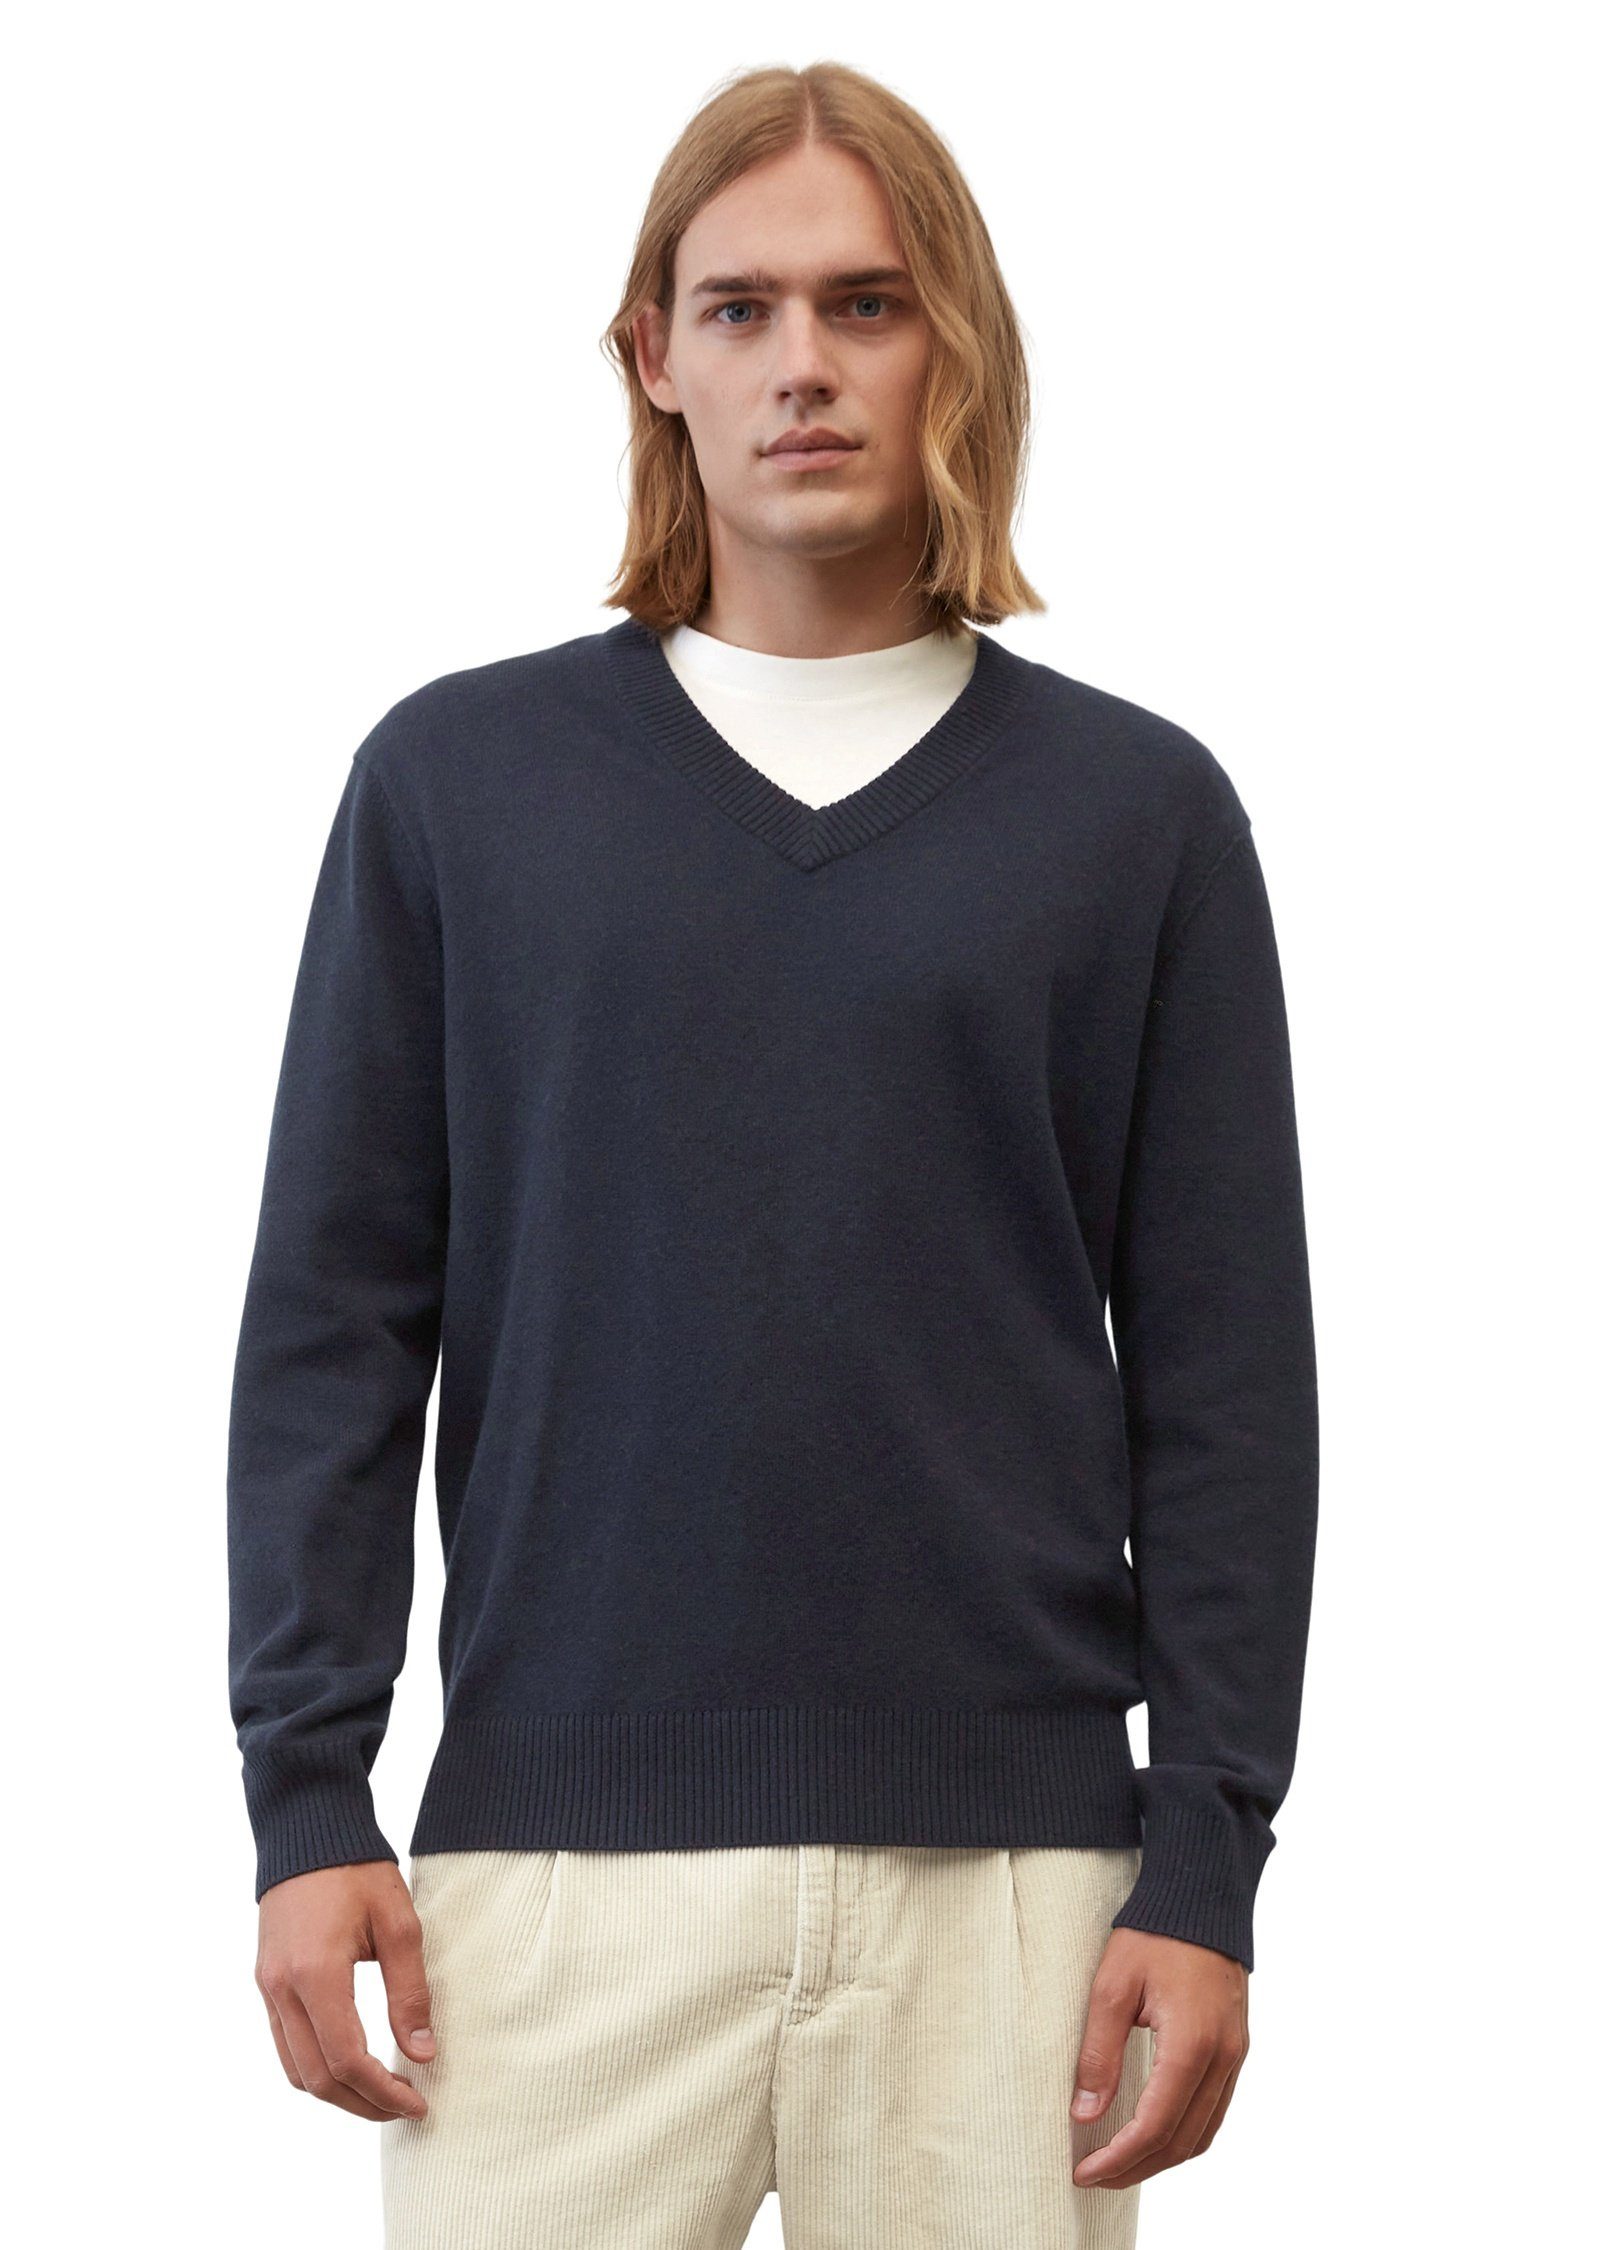 Marc O'Polo V-Ausschnitt-Pullover aus softem Schurwolle-Baumwolle-Mix dunkelblau